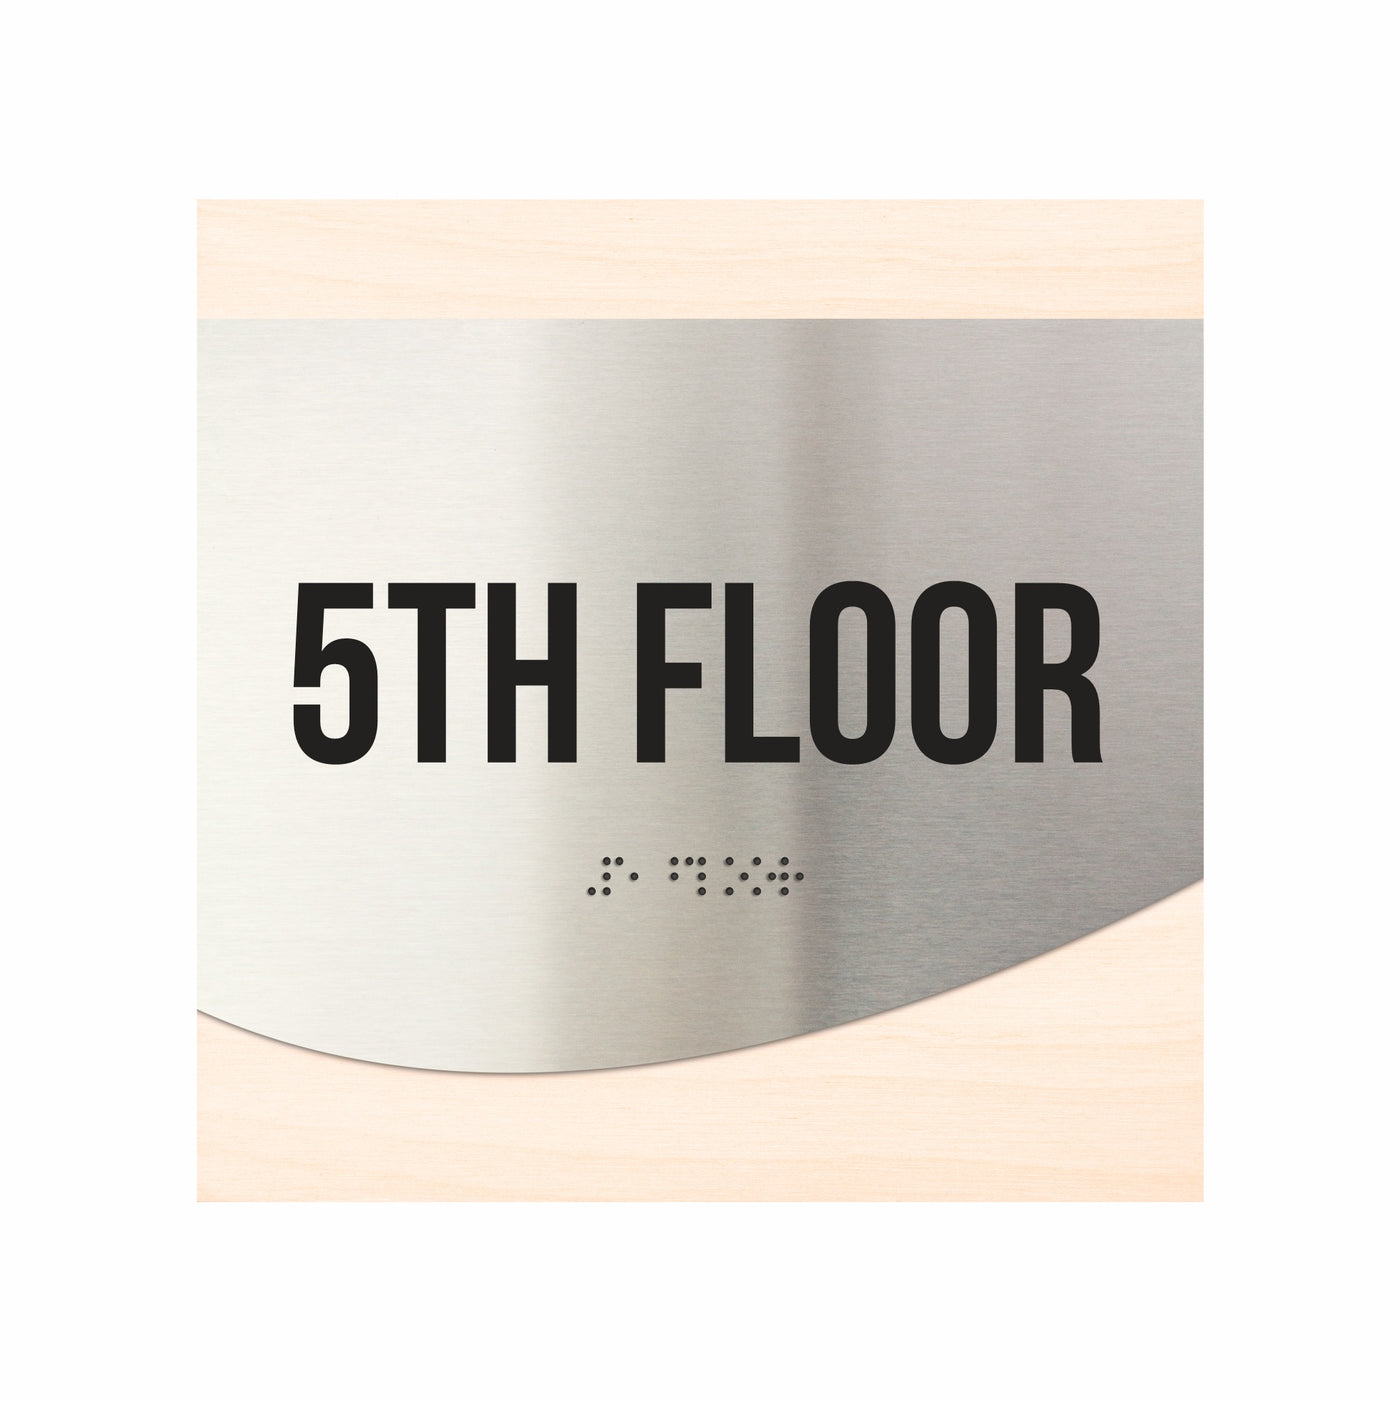 Floor Signs - Sign For 5s Floor - Stainless Steel & Wood  - "Jure" Design